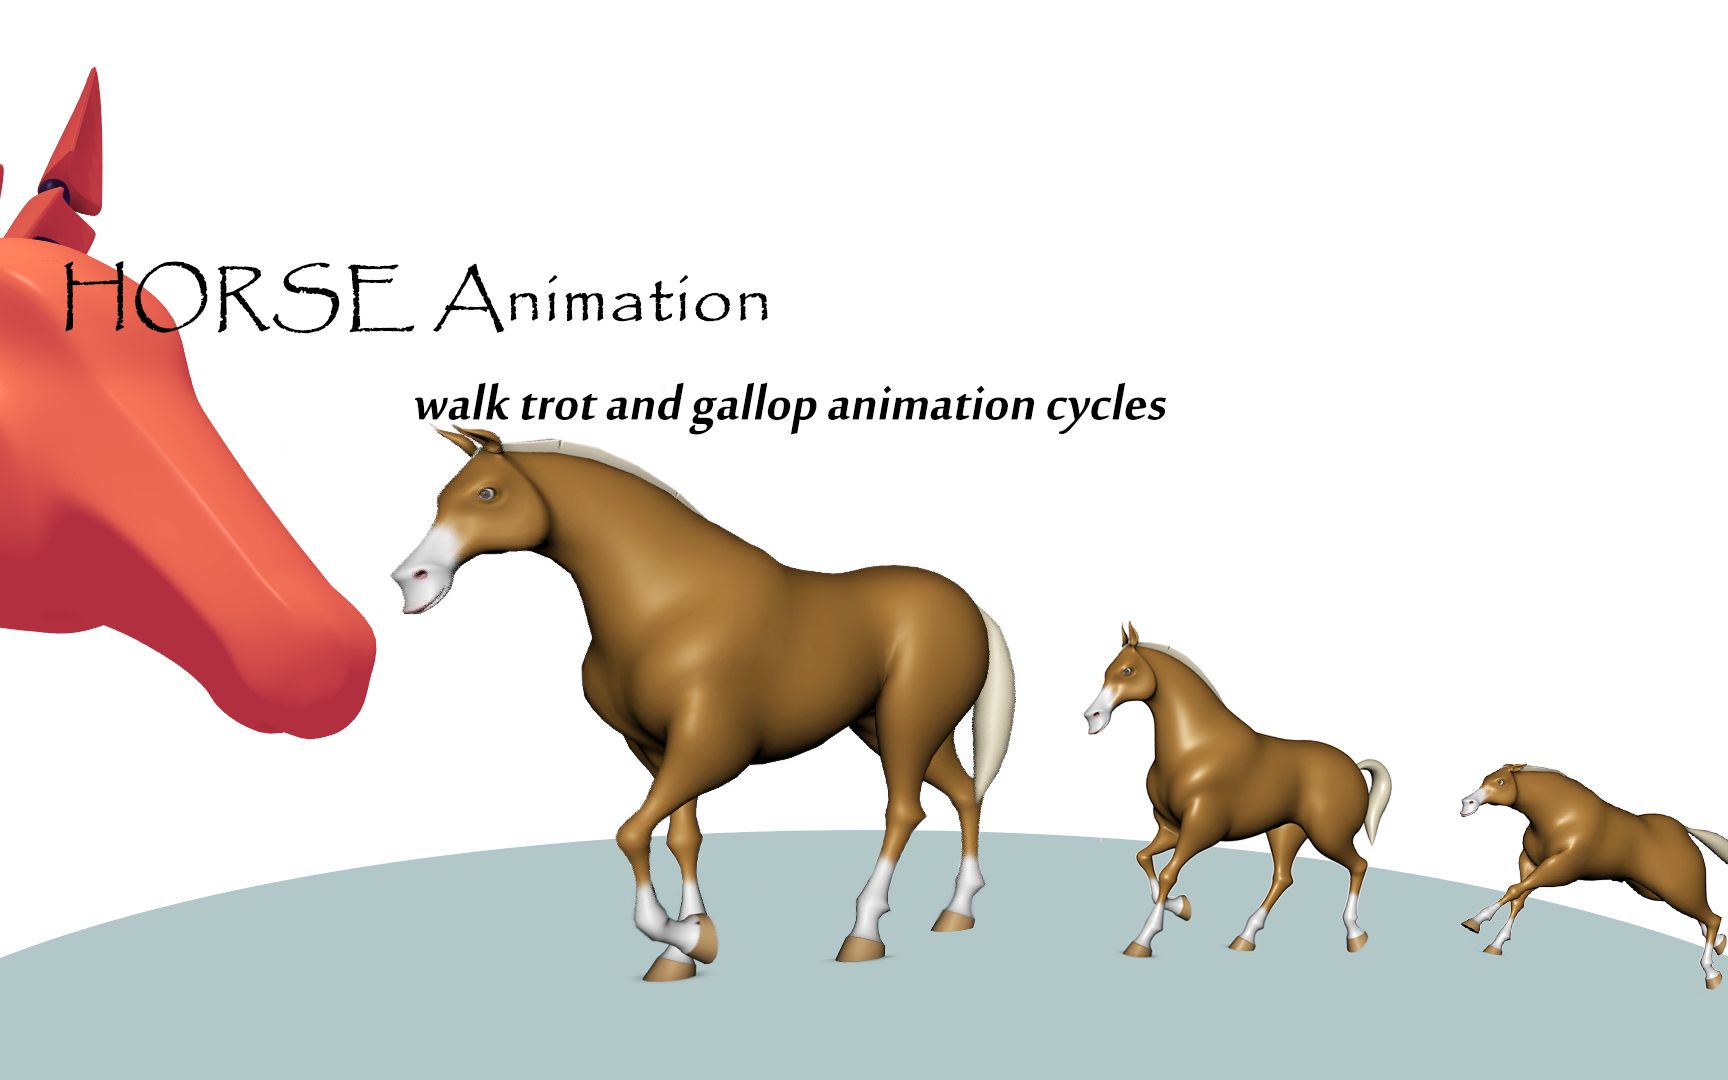 Horse animation showcase_Walk Trot and Gallop animation  cycles.马走小跑驰骋四足动物走跑循环动画-哔哩哔哩